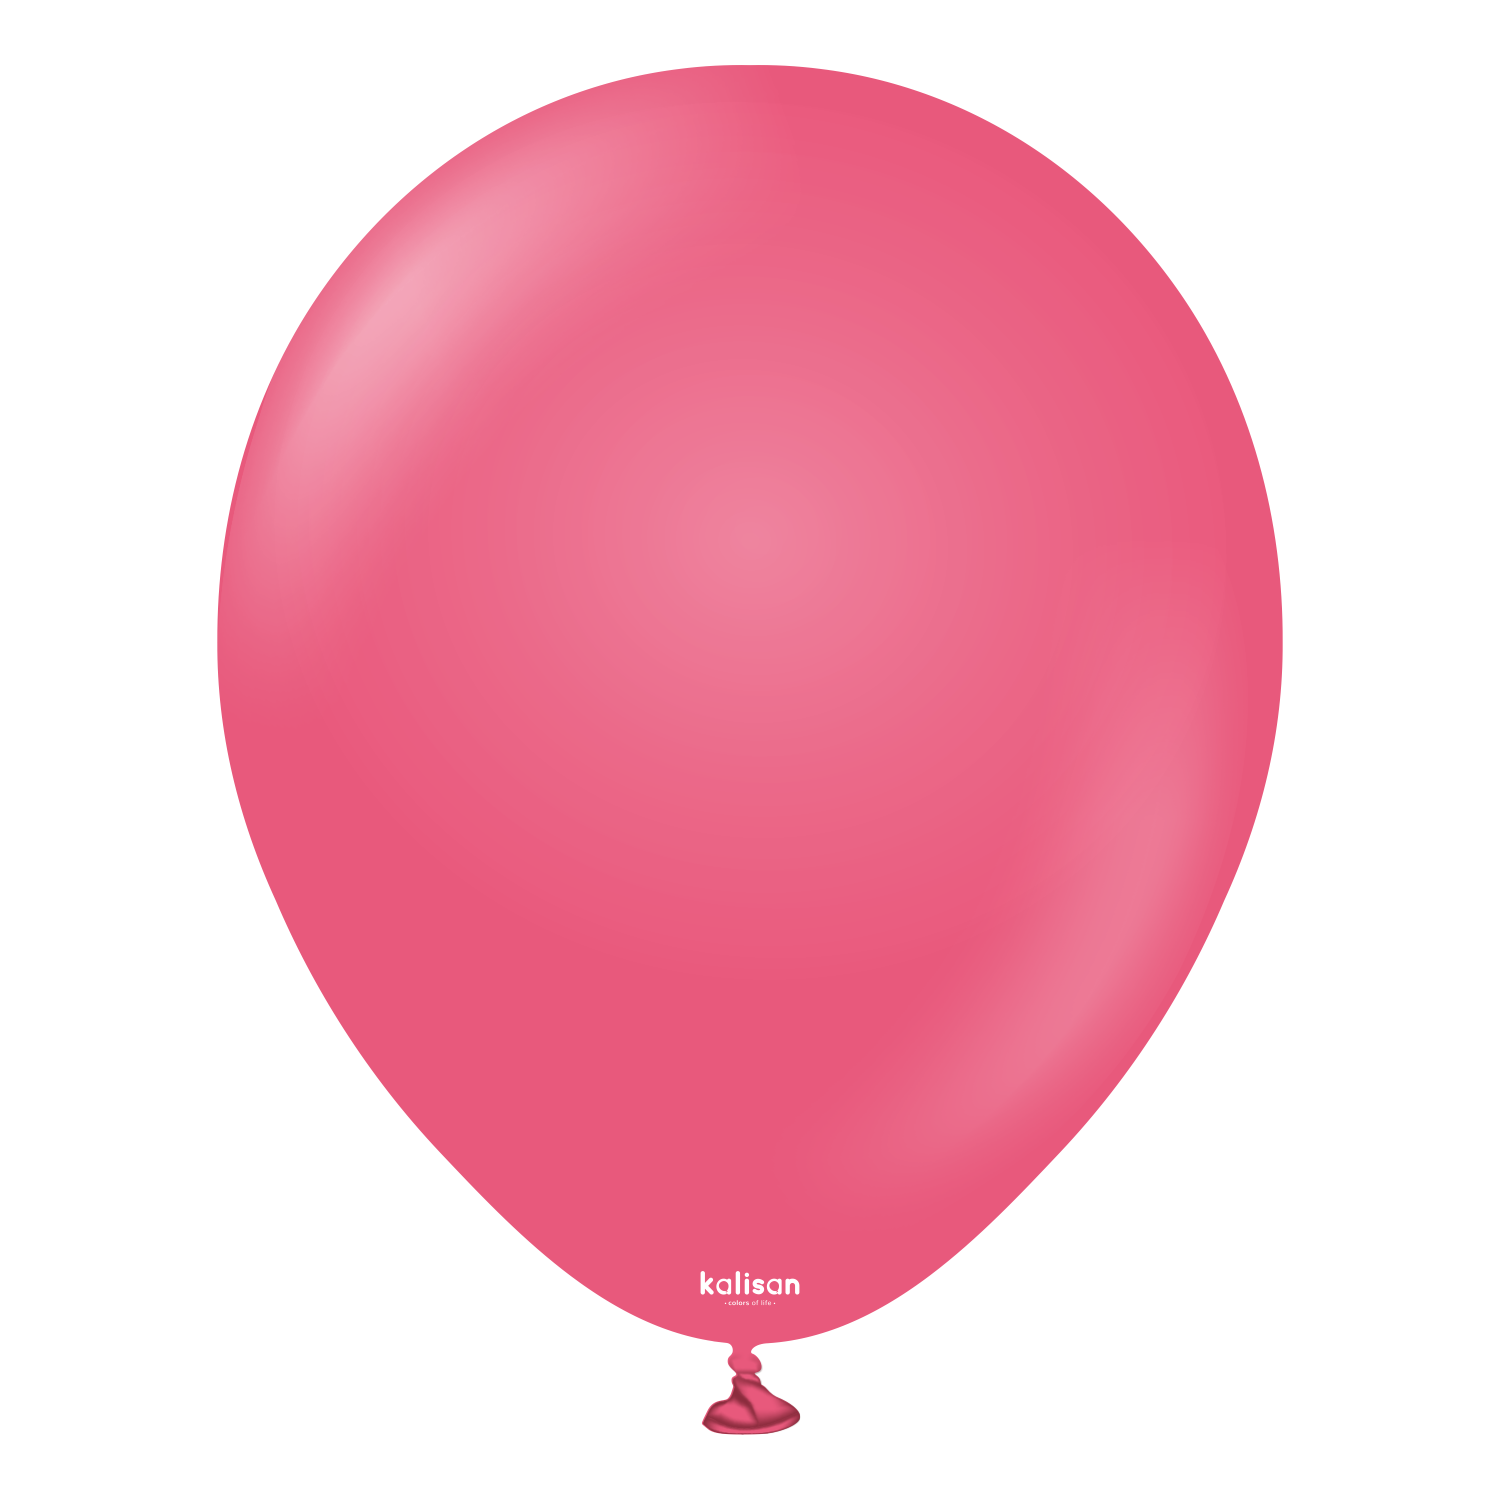 Premium lateksballong Kalisan i fuchsia farge 